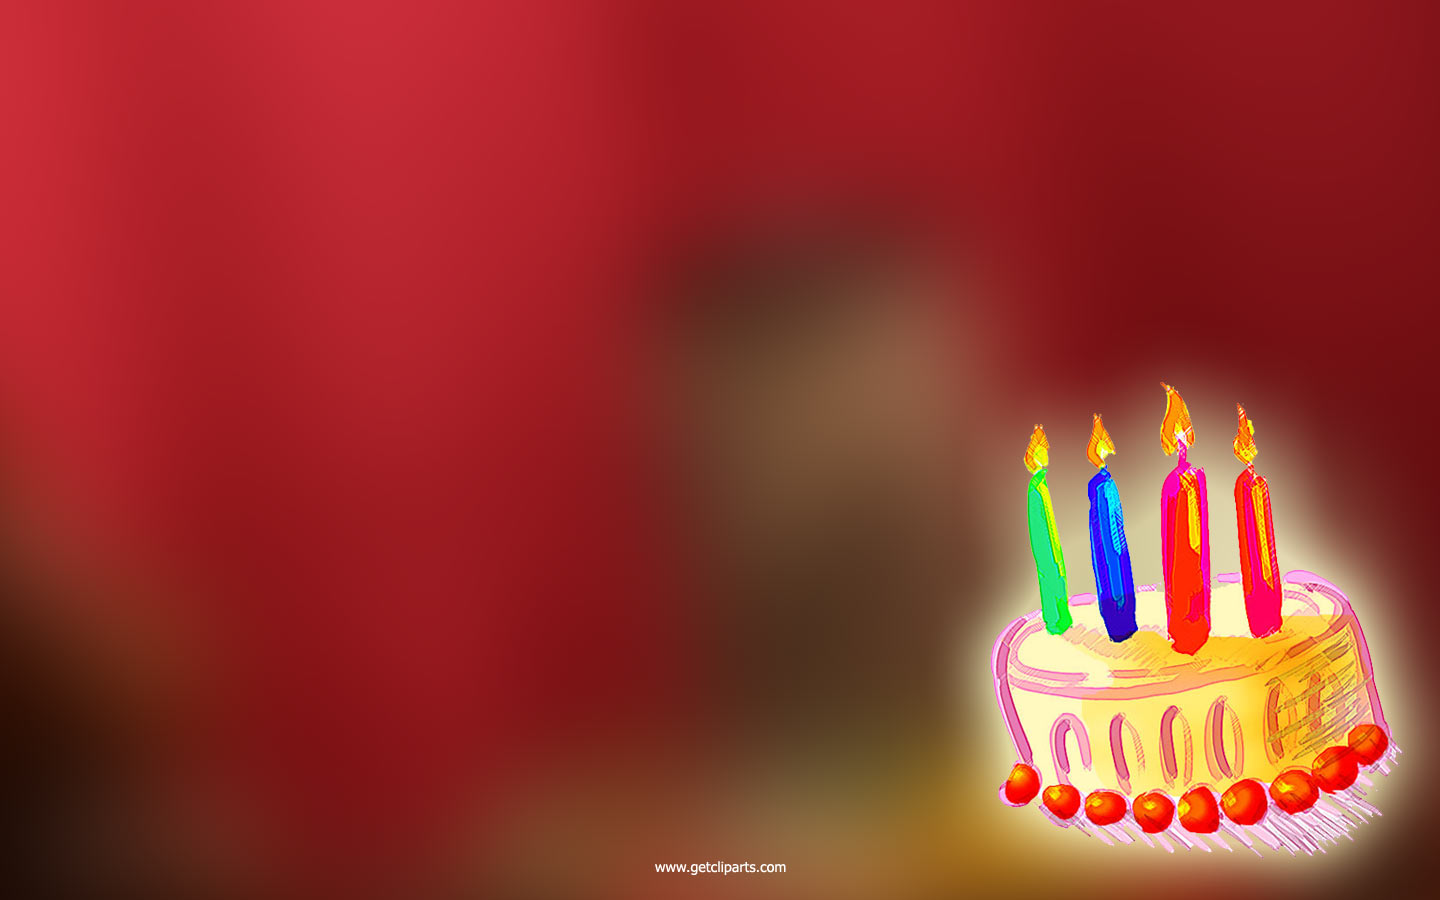 70+] Happy Birthday Background Images - WallpaperSafari